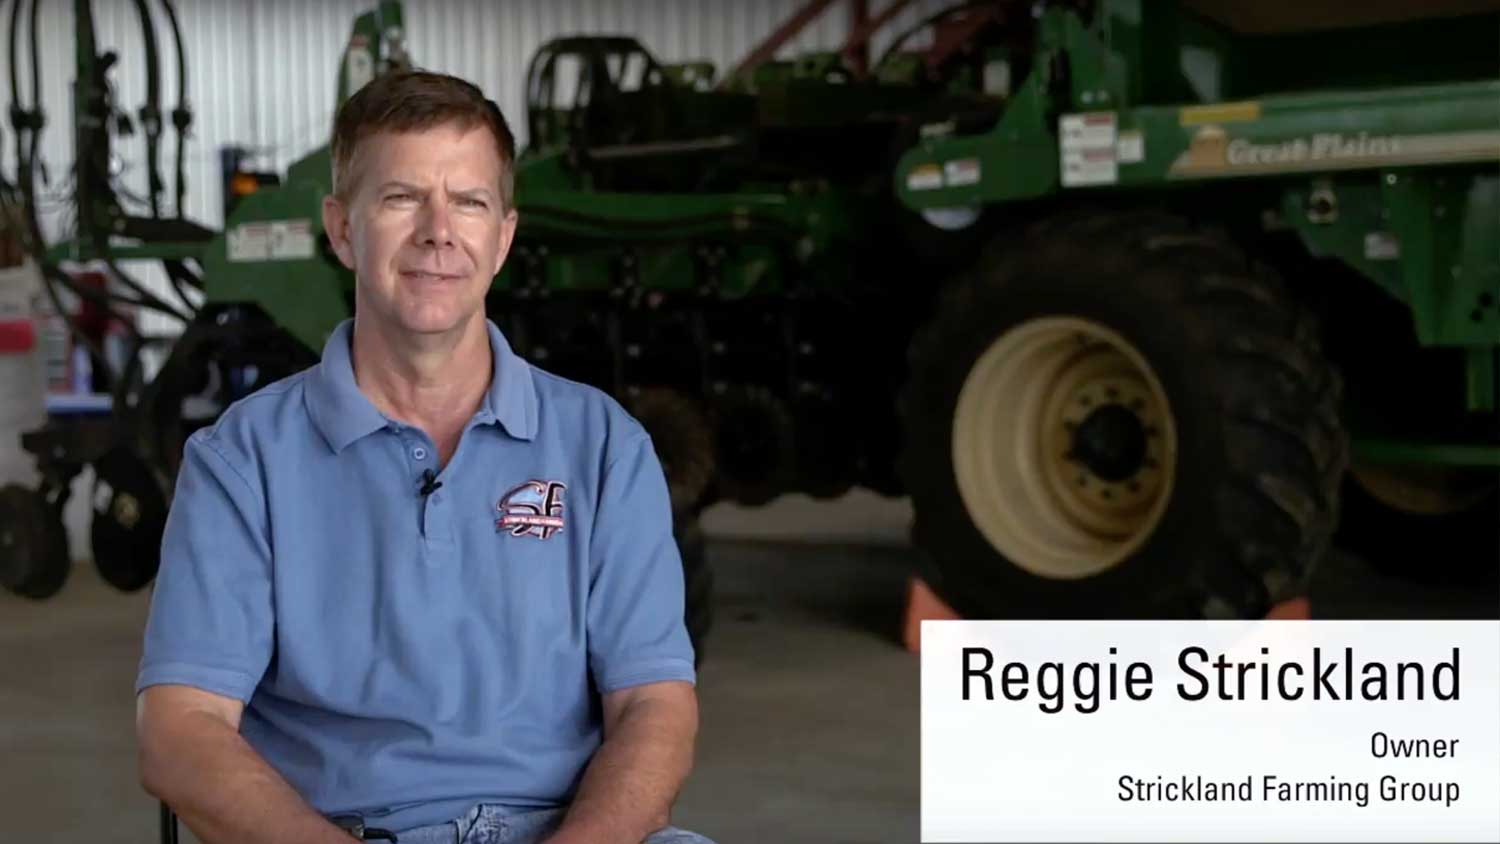 Reggie Strickland. Owner of Strickland Farming Group